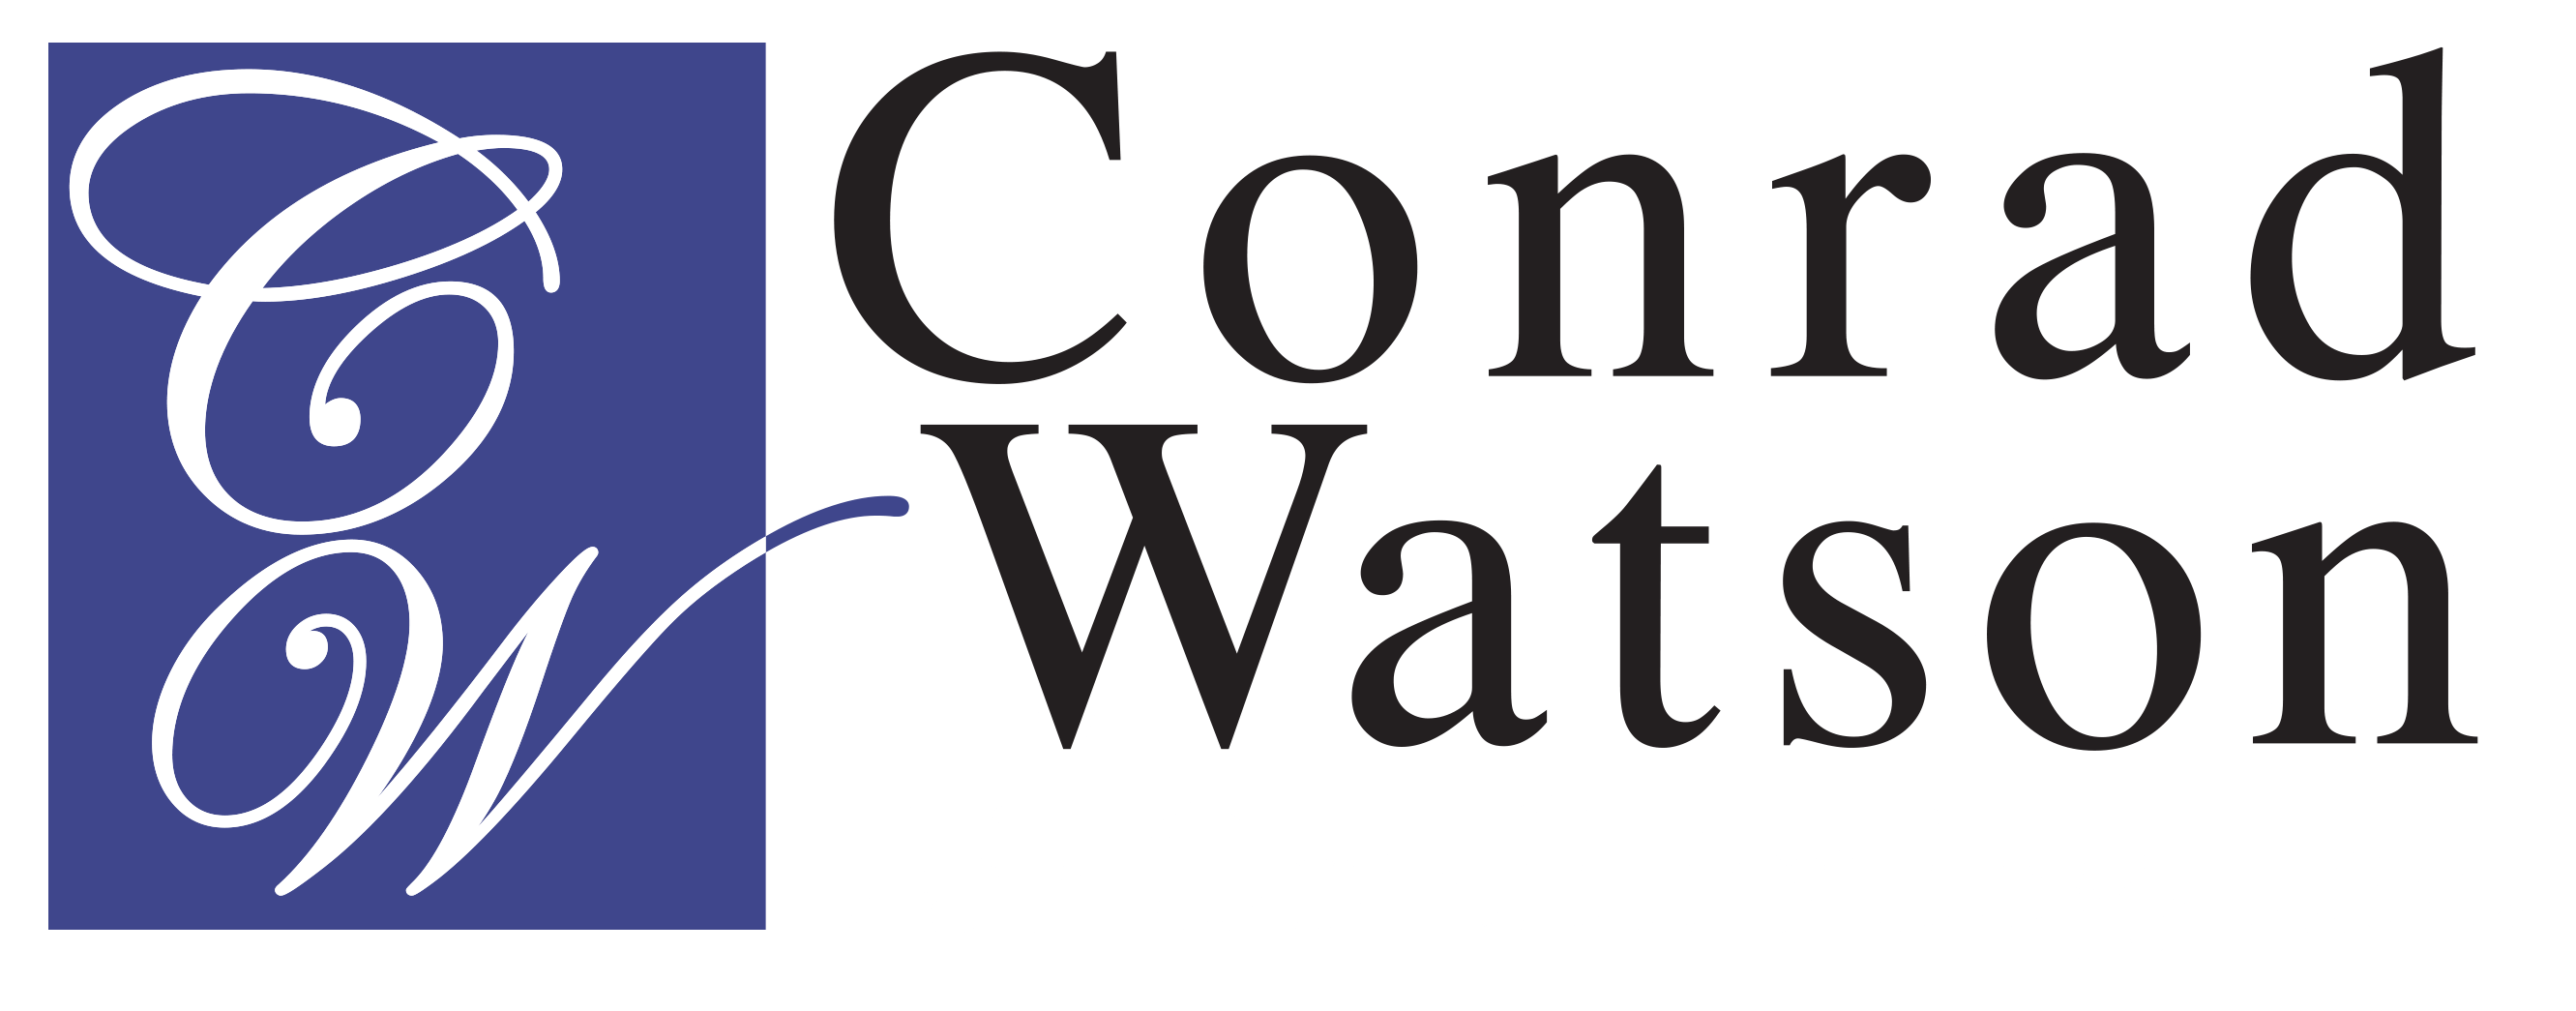 Conrad Logo - Home Watson Air Conditioning, Inc